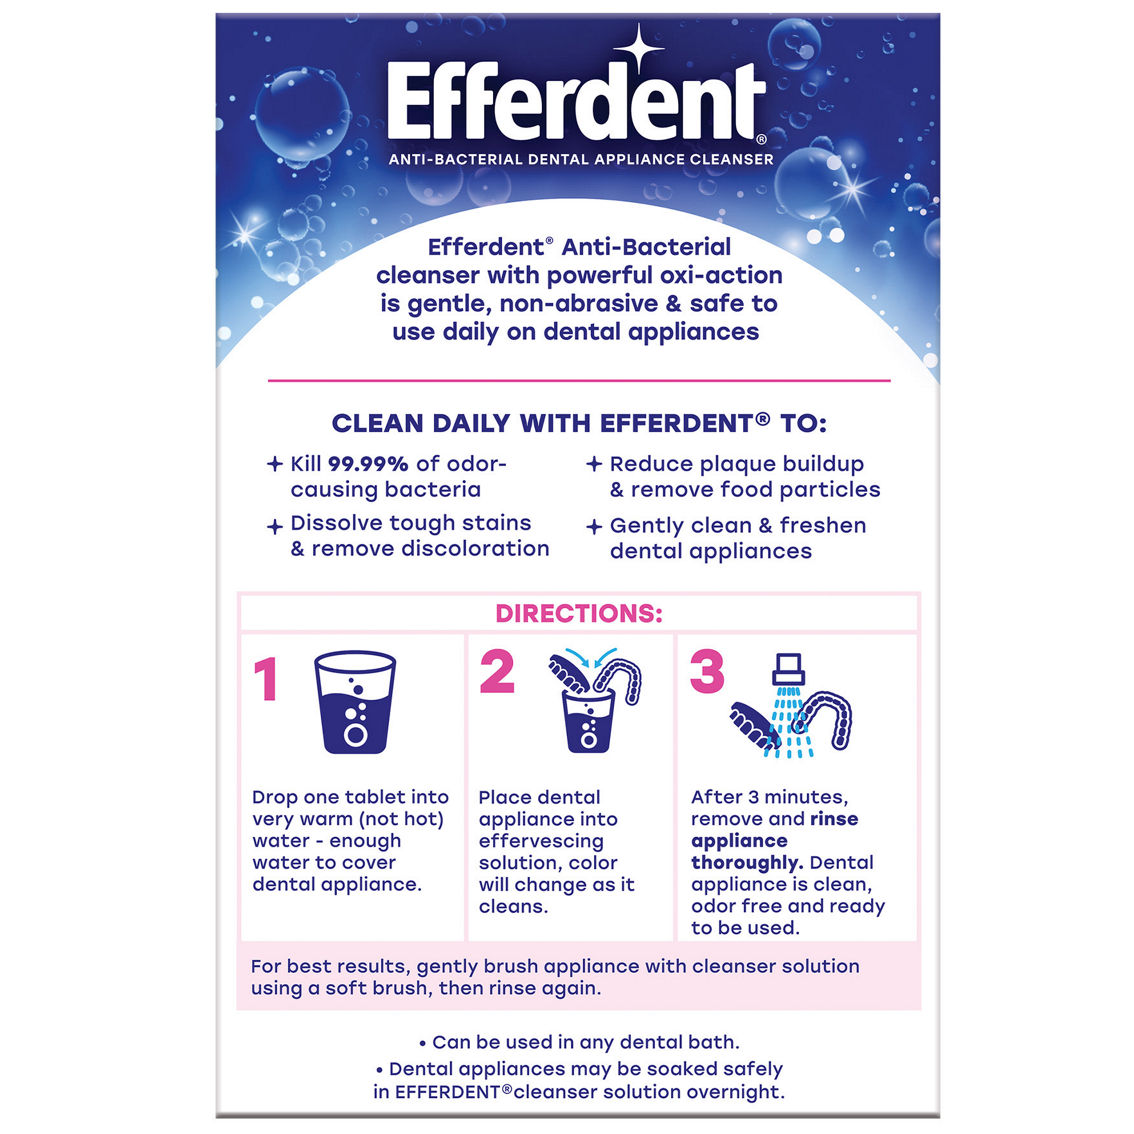 Efferdent Anti-Bacterial Denture Cleanser Tablets 102 ct. - Image 2 of 4